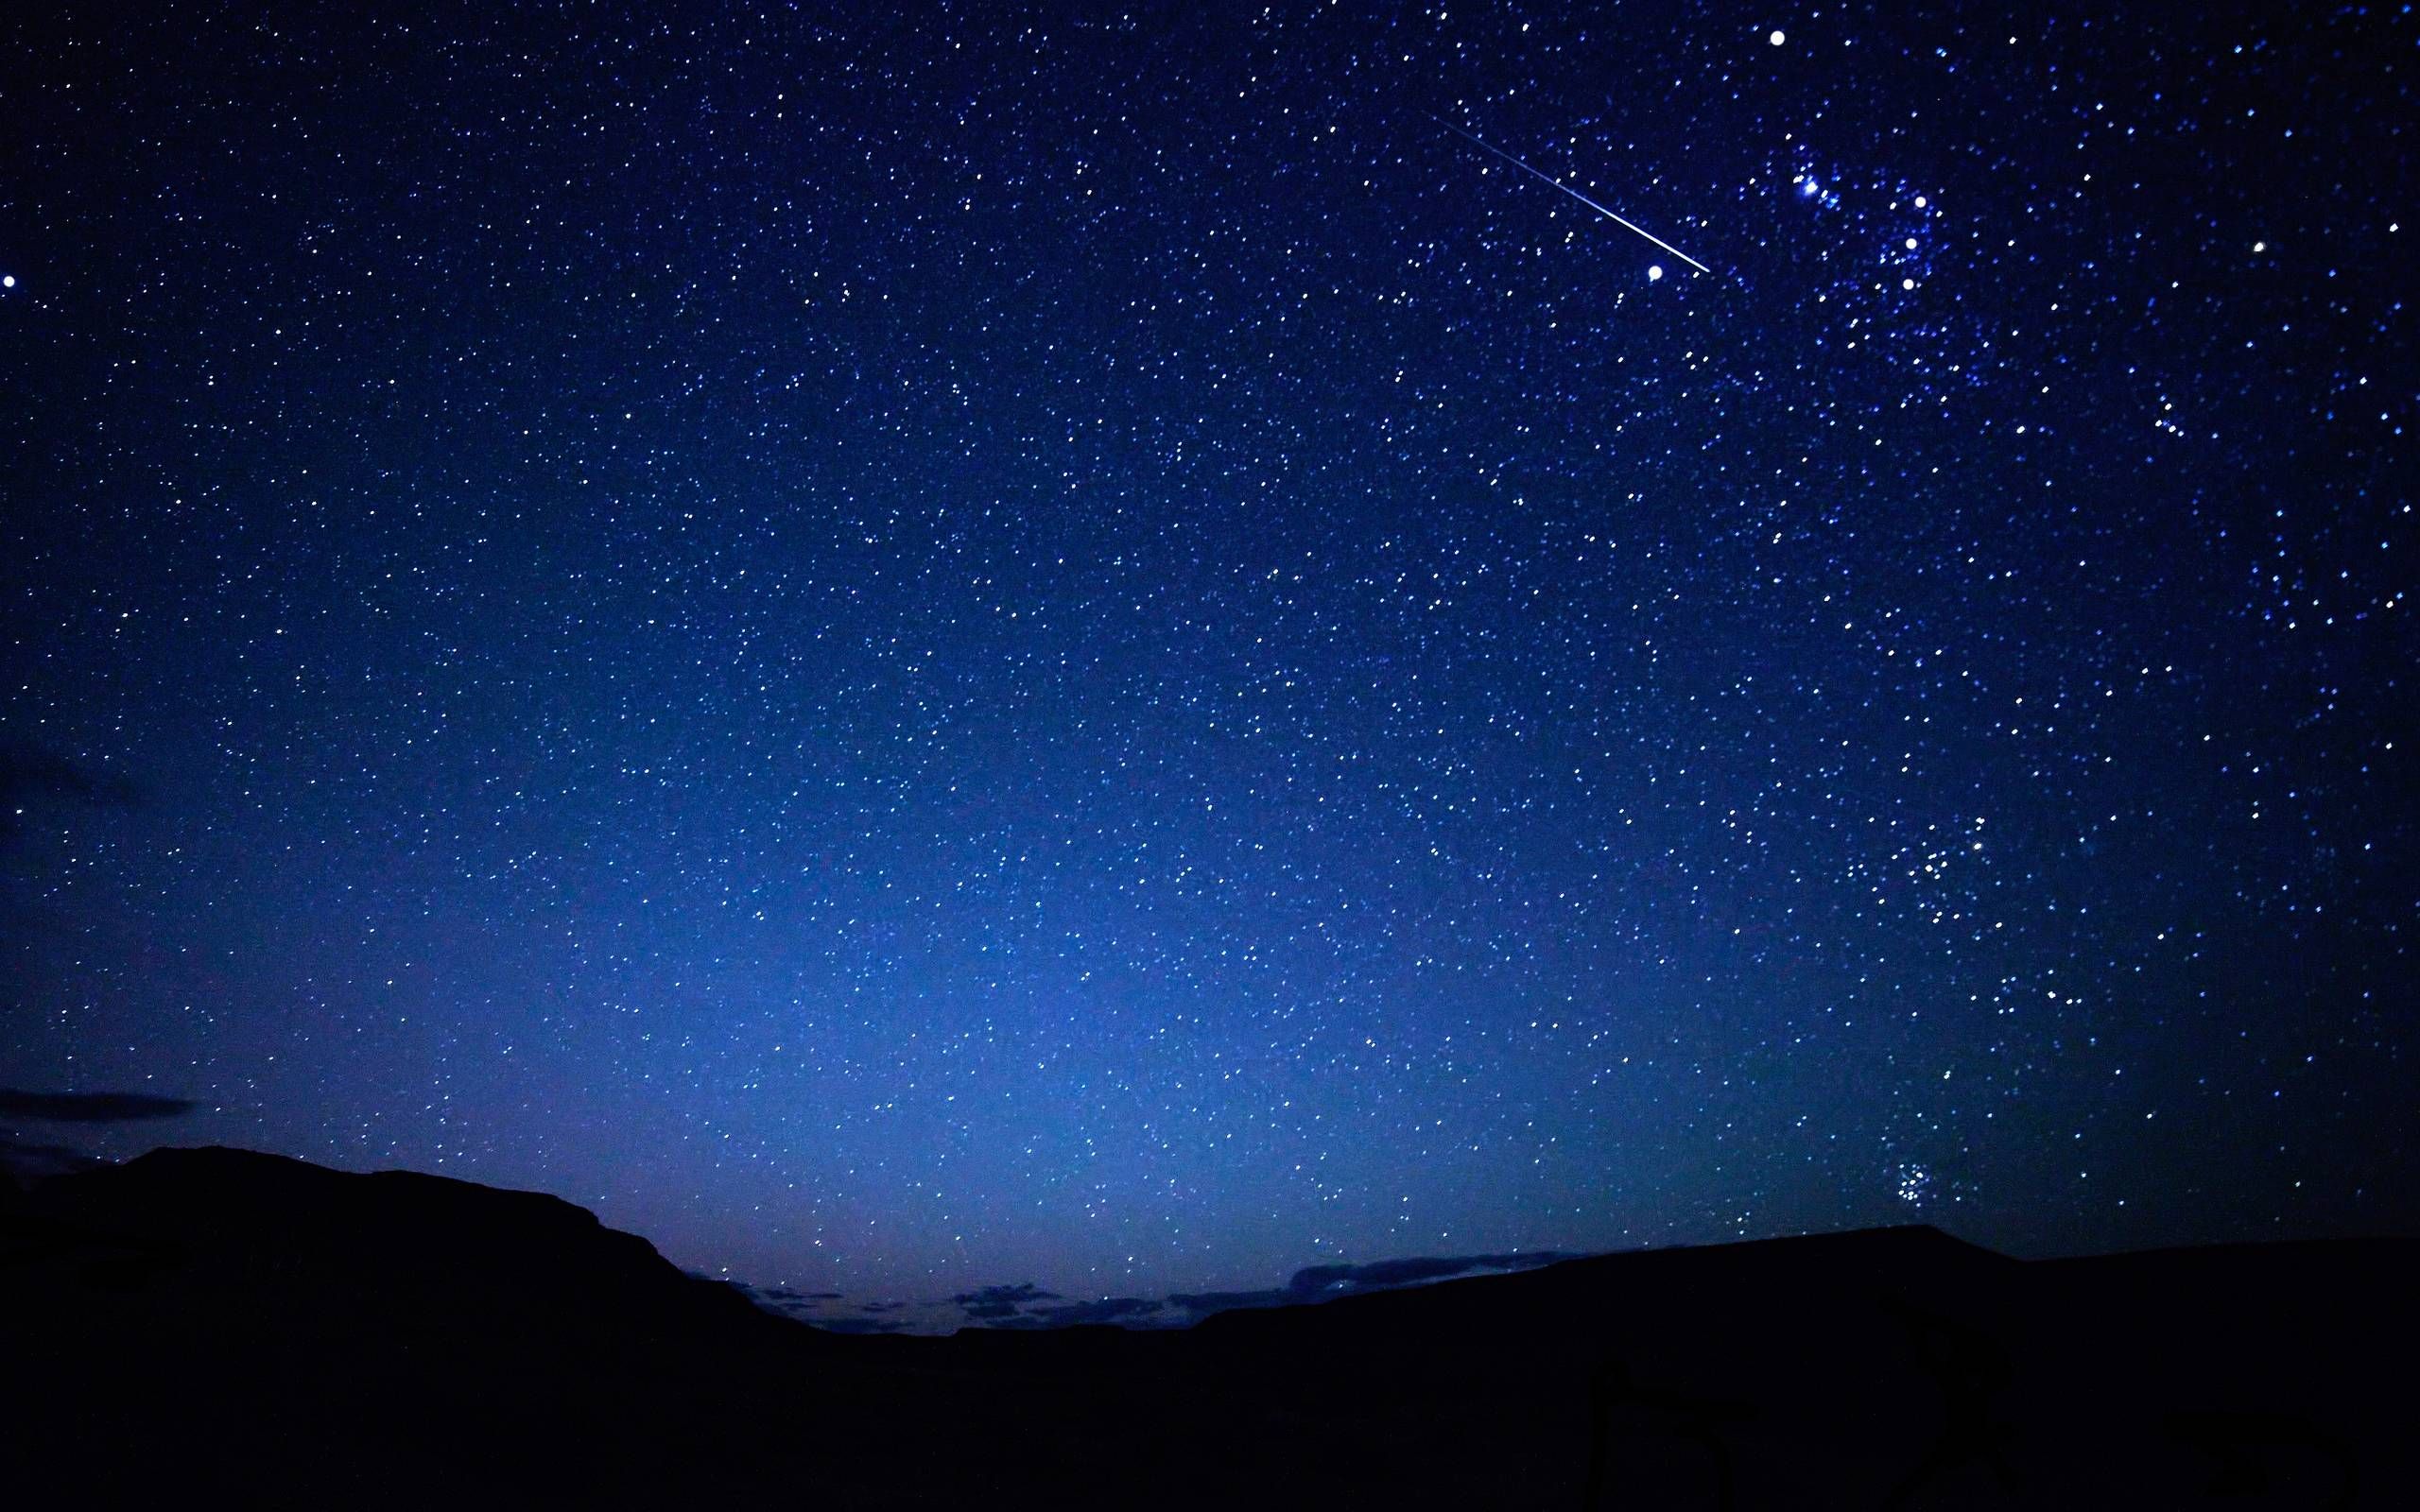 Image of night sky with shooting star